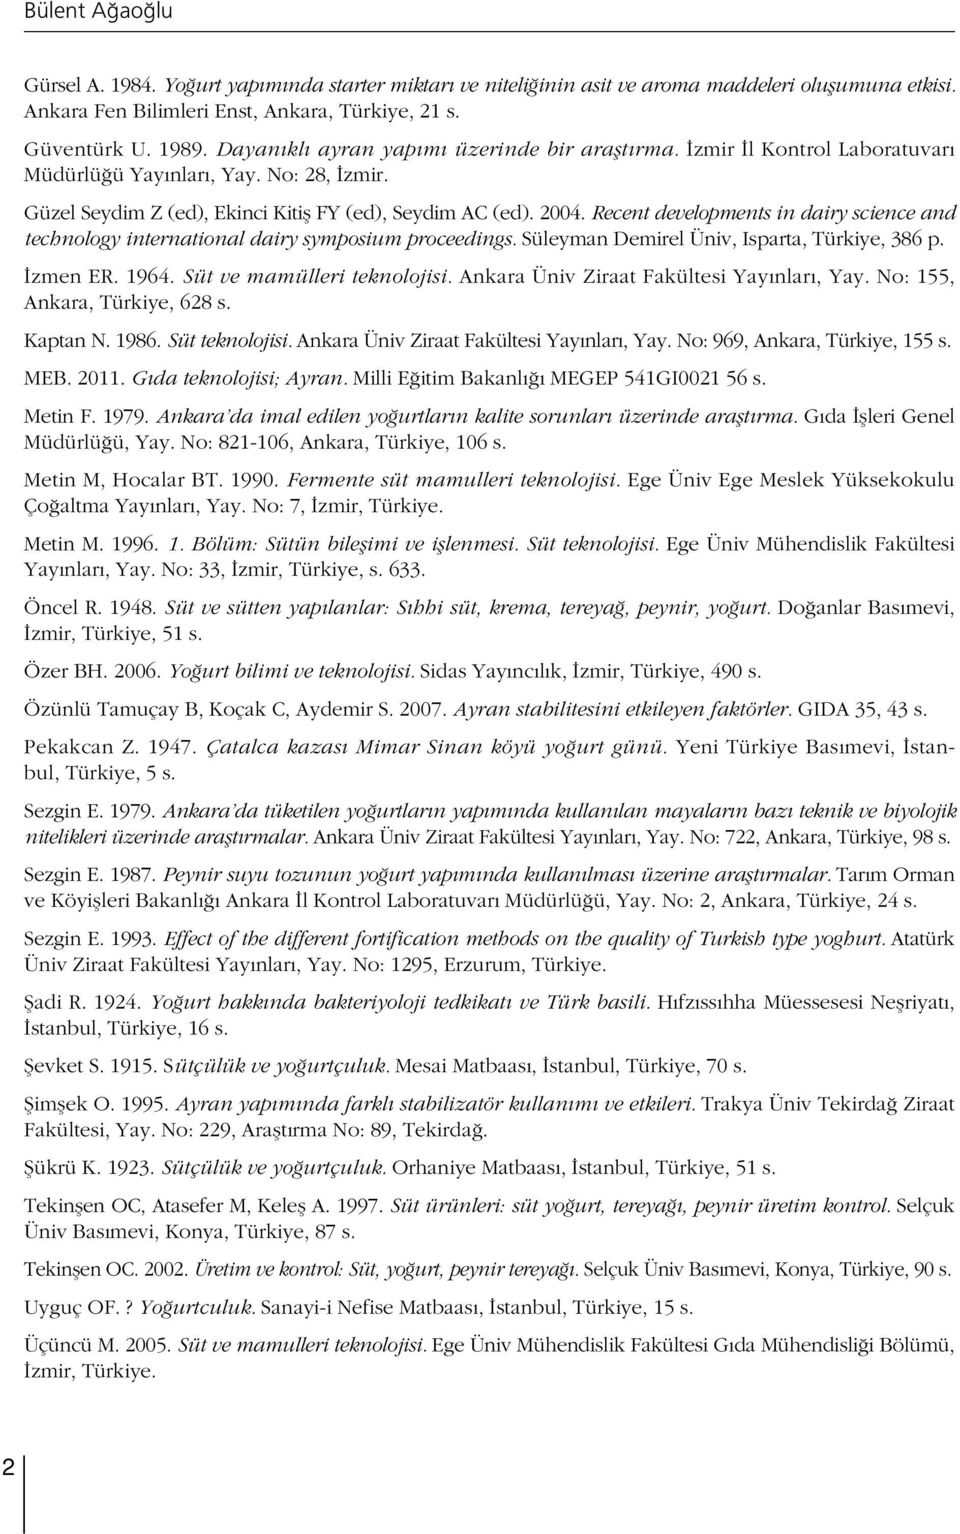 Recent developments in dairy science and technology international dairy symposium proceedings. Süleyman Demirel Üniv, Isparta, Türkiye, 386 p. zmen ER. 1964. Süt ve mamülleri teknolojisi.